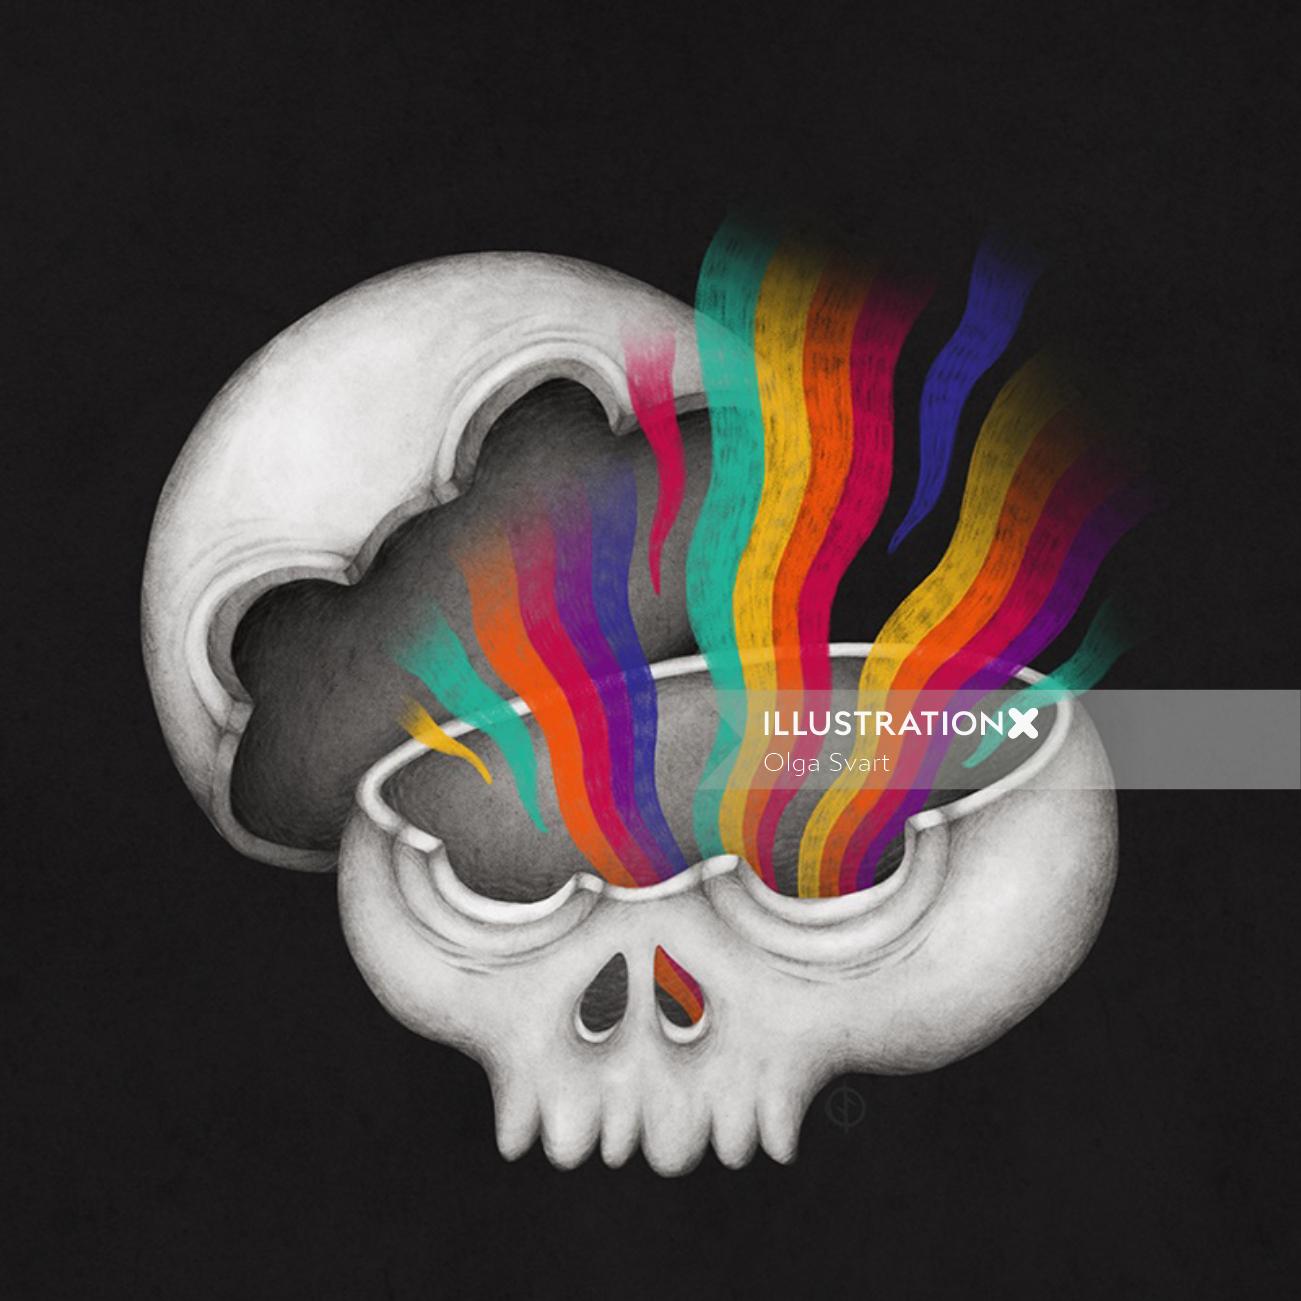 Skull radiation art work